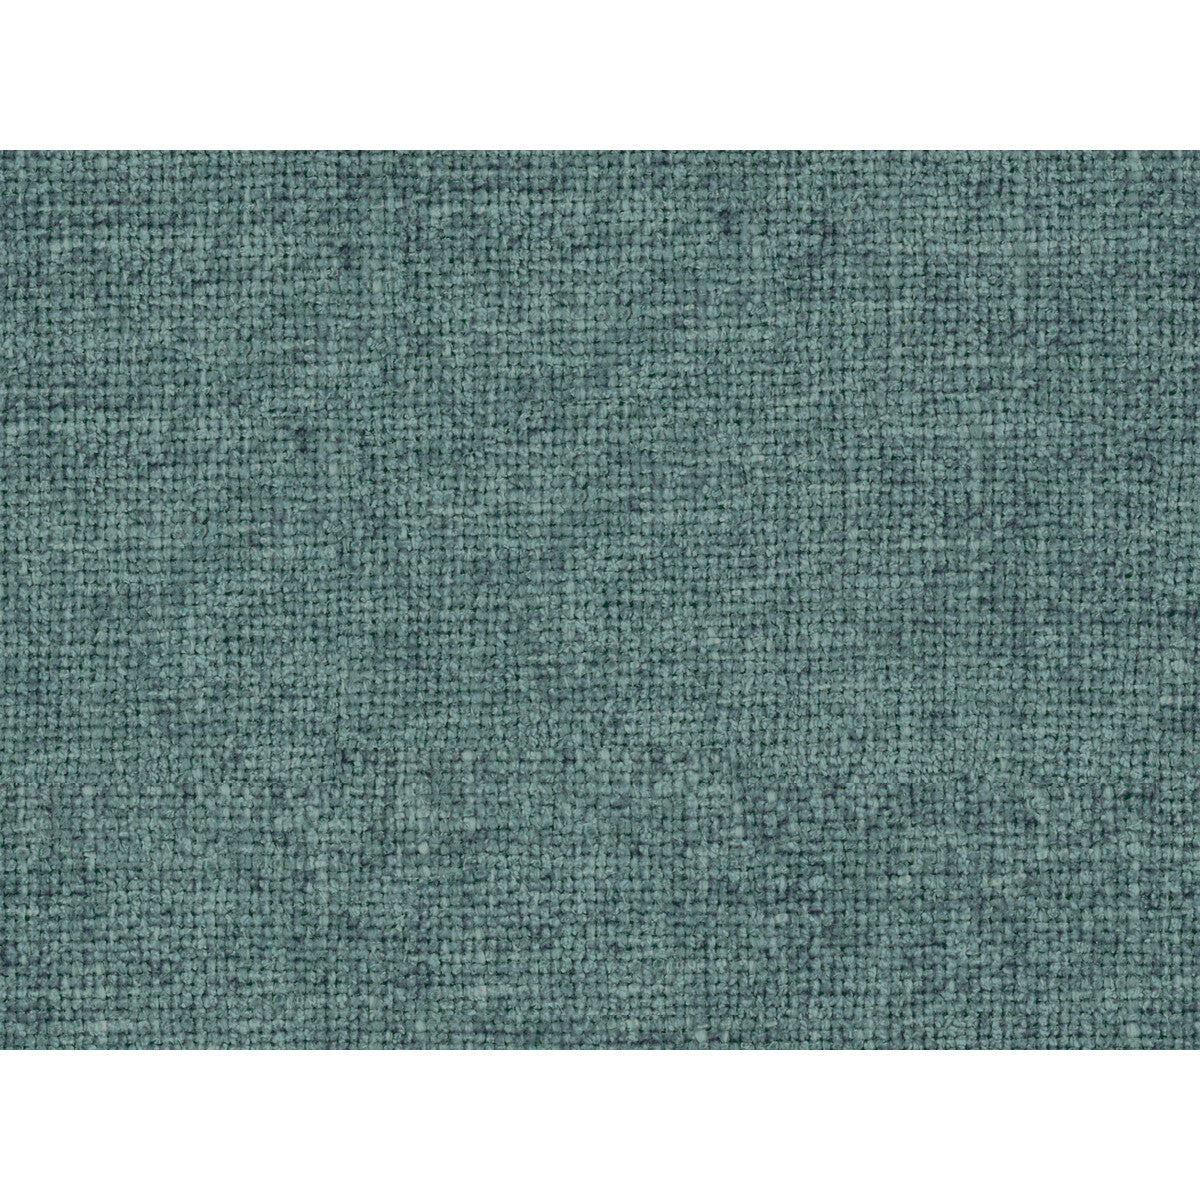 Kravet Smart fabric in 34293-35 color - pattern 34293.35.0 - by Kravet Smart